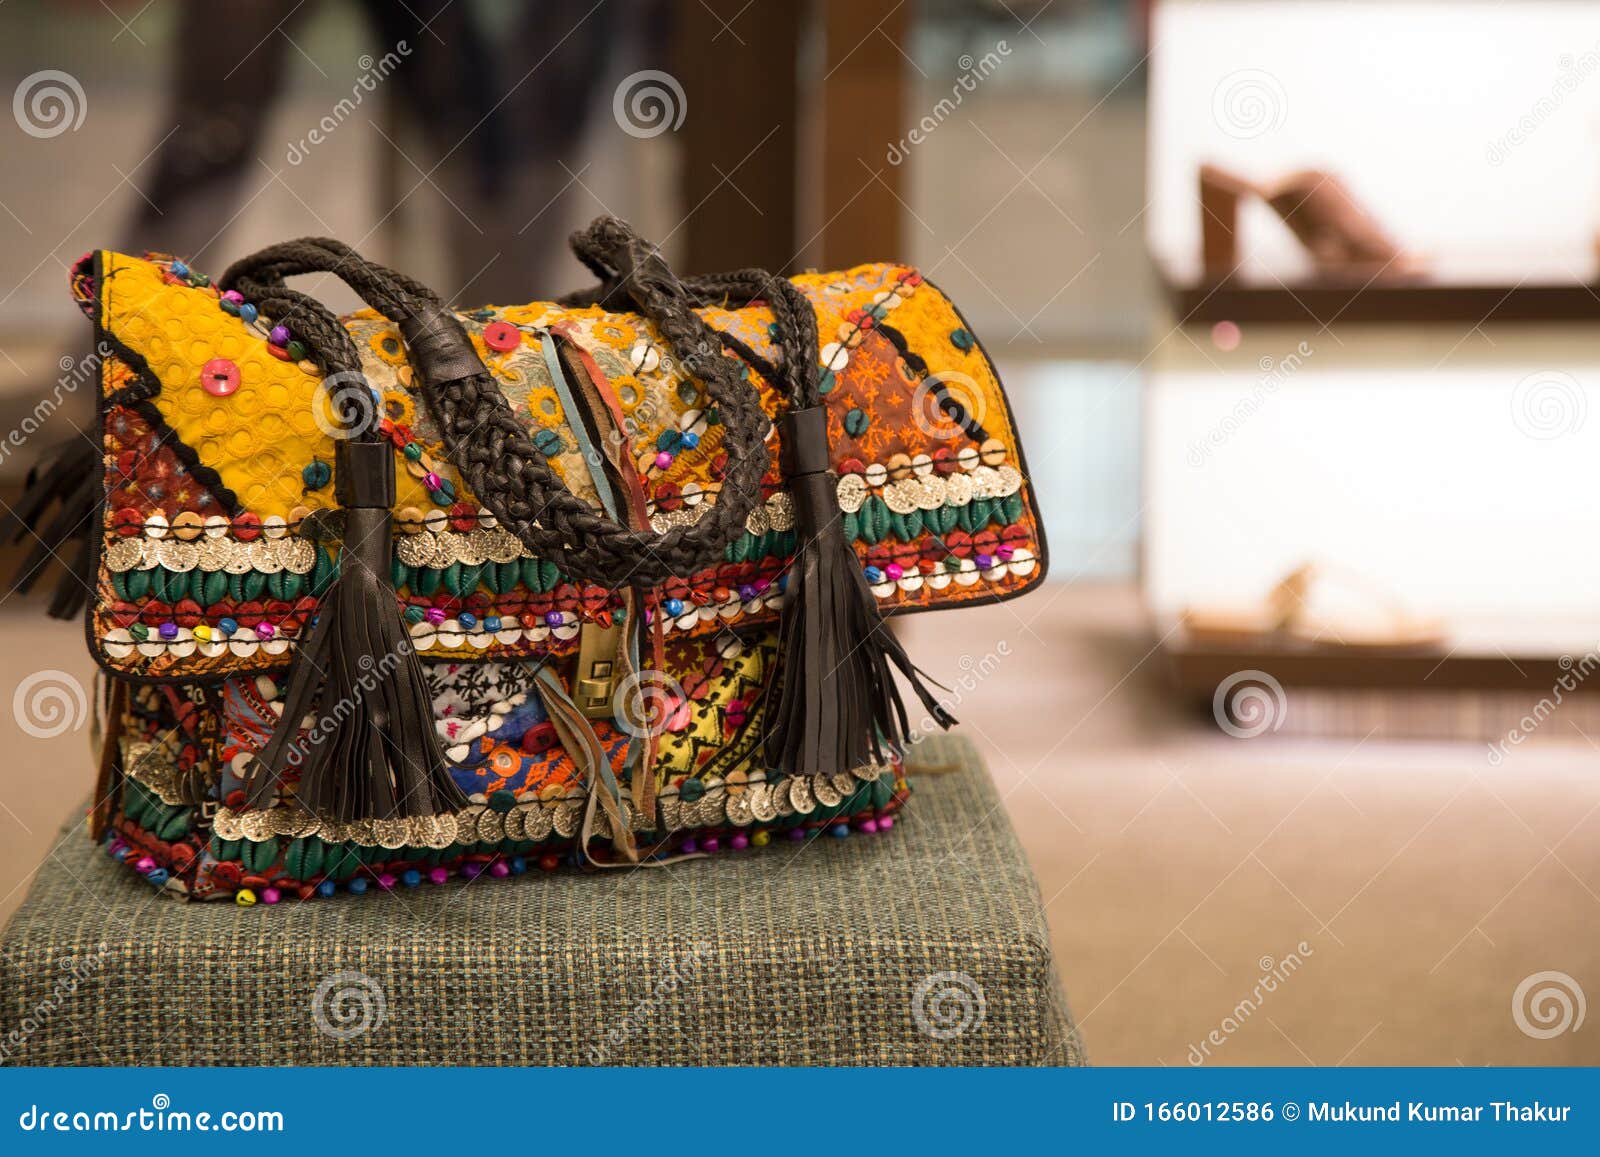 Photo of Fancy Bags | Stock Image MXI28986